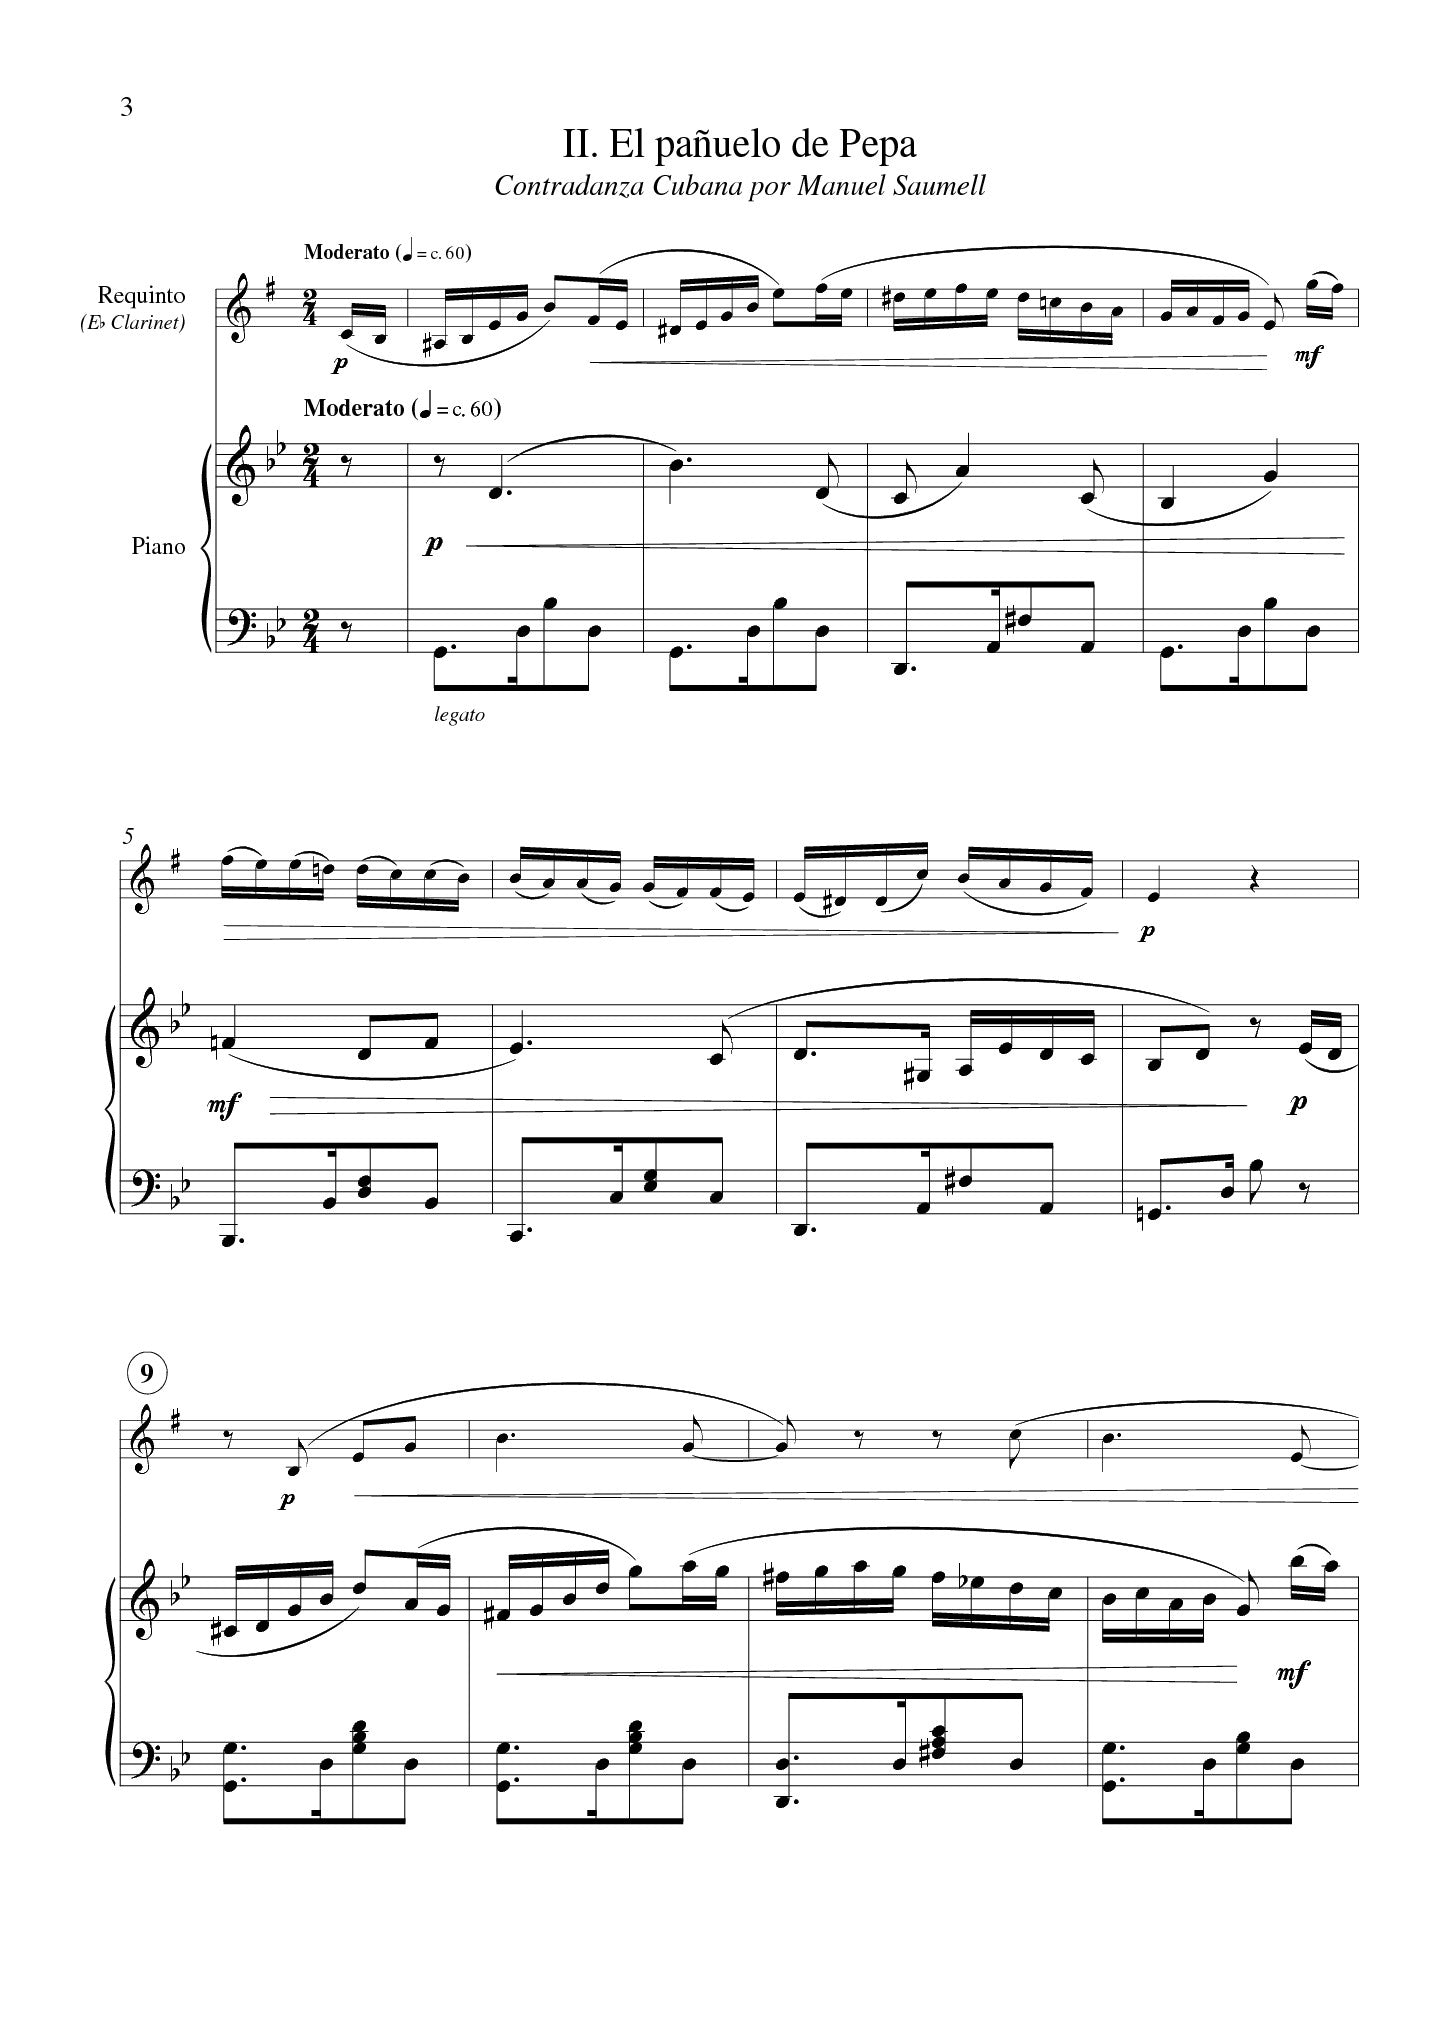 Carvajal-Gómez - Suite Caribeana for E-flat Clarinet and Piano